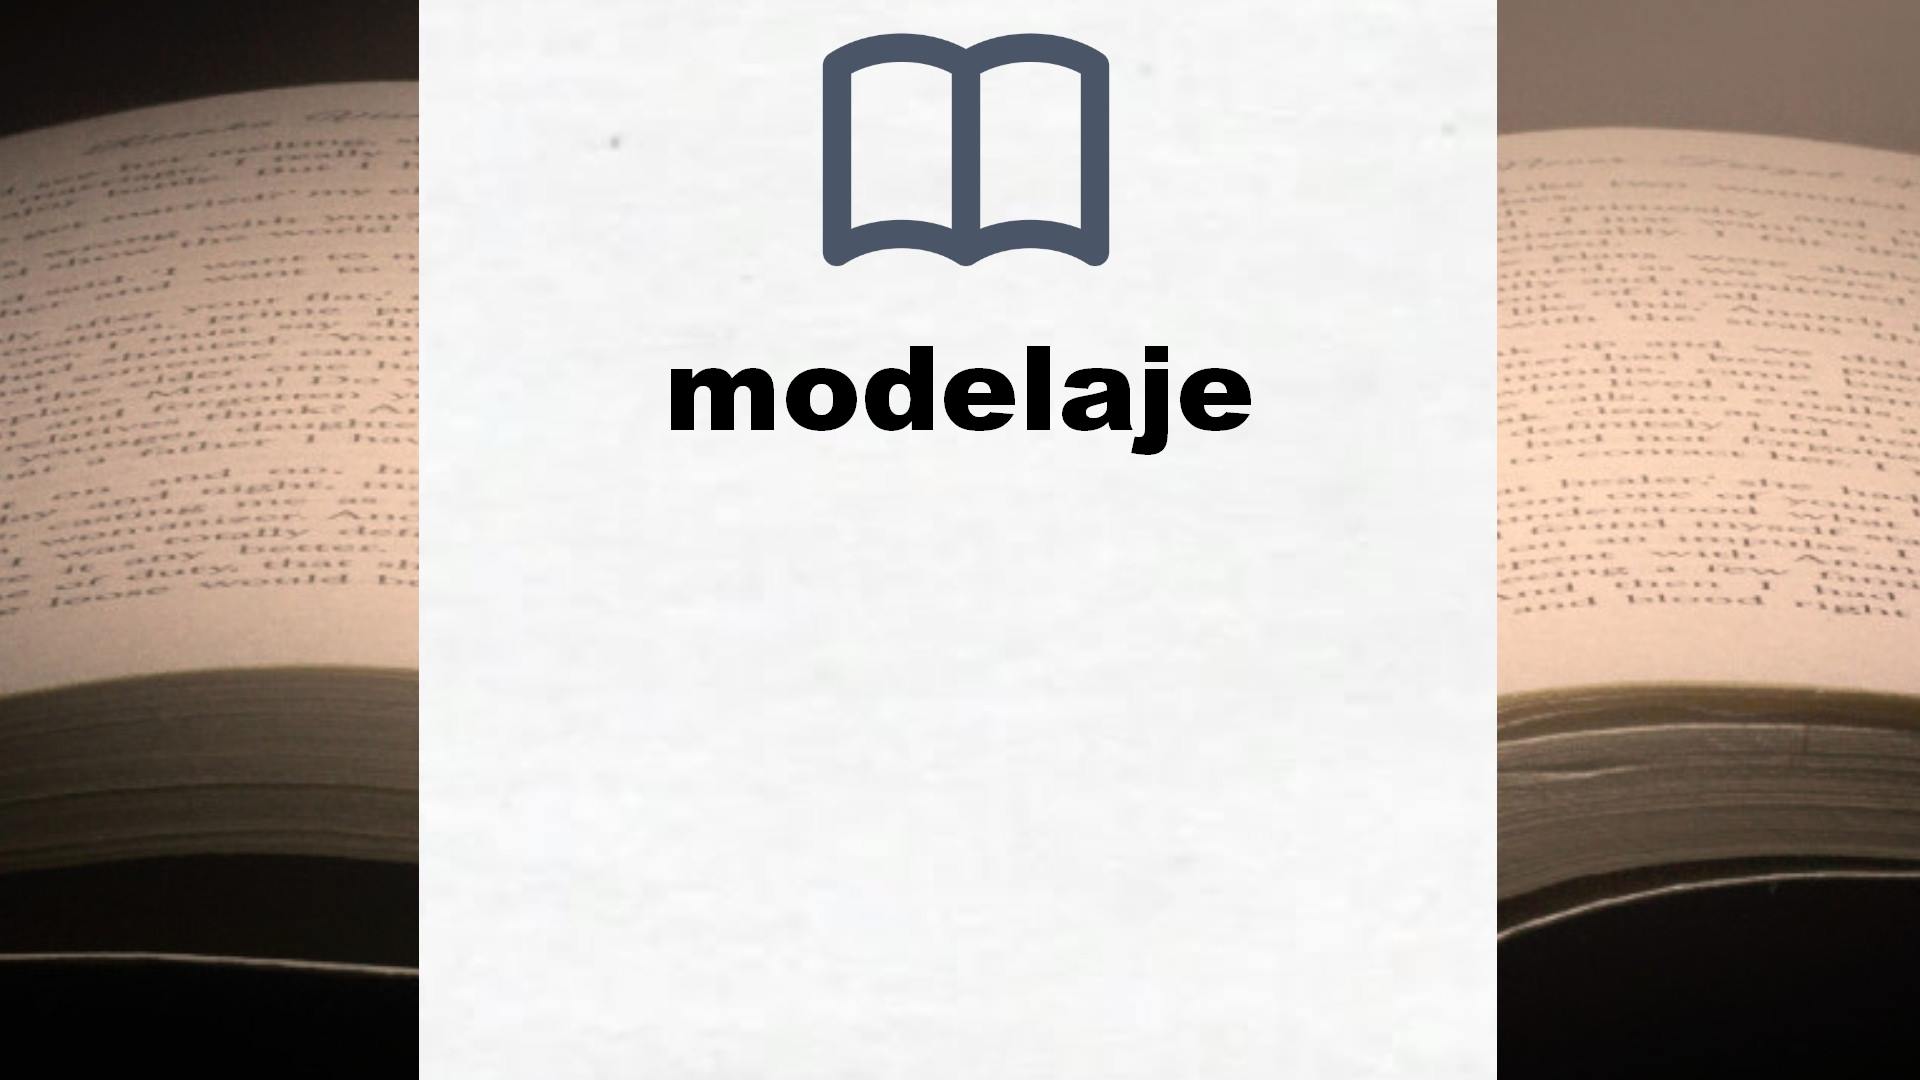 Libros sobre modelaje